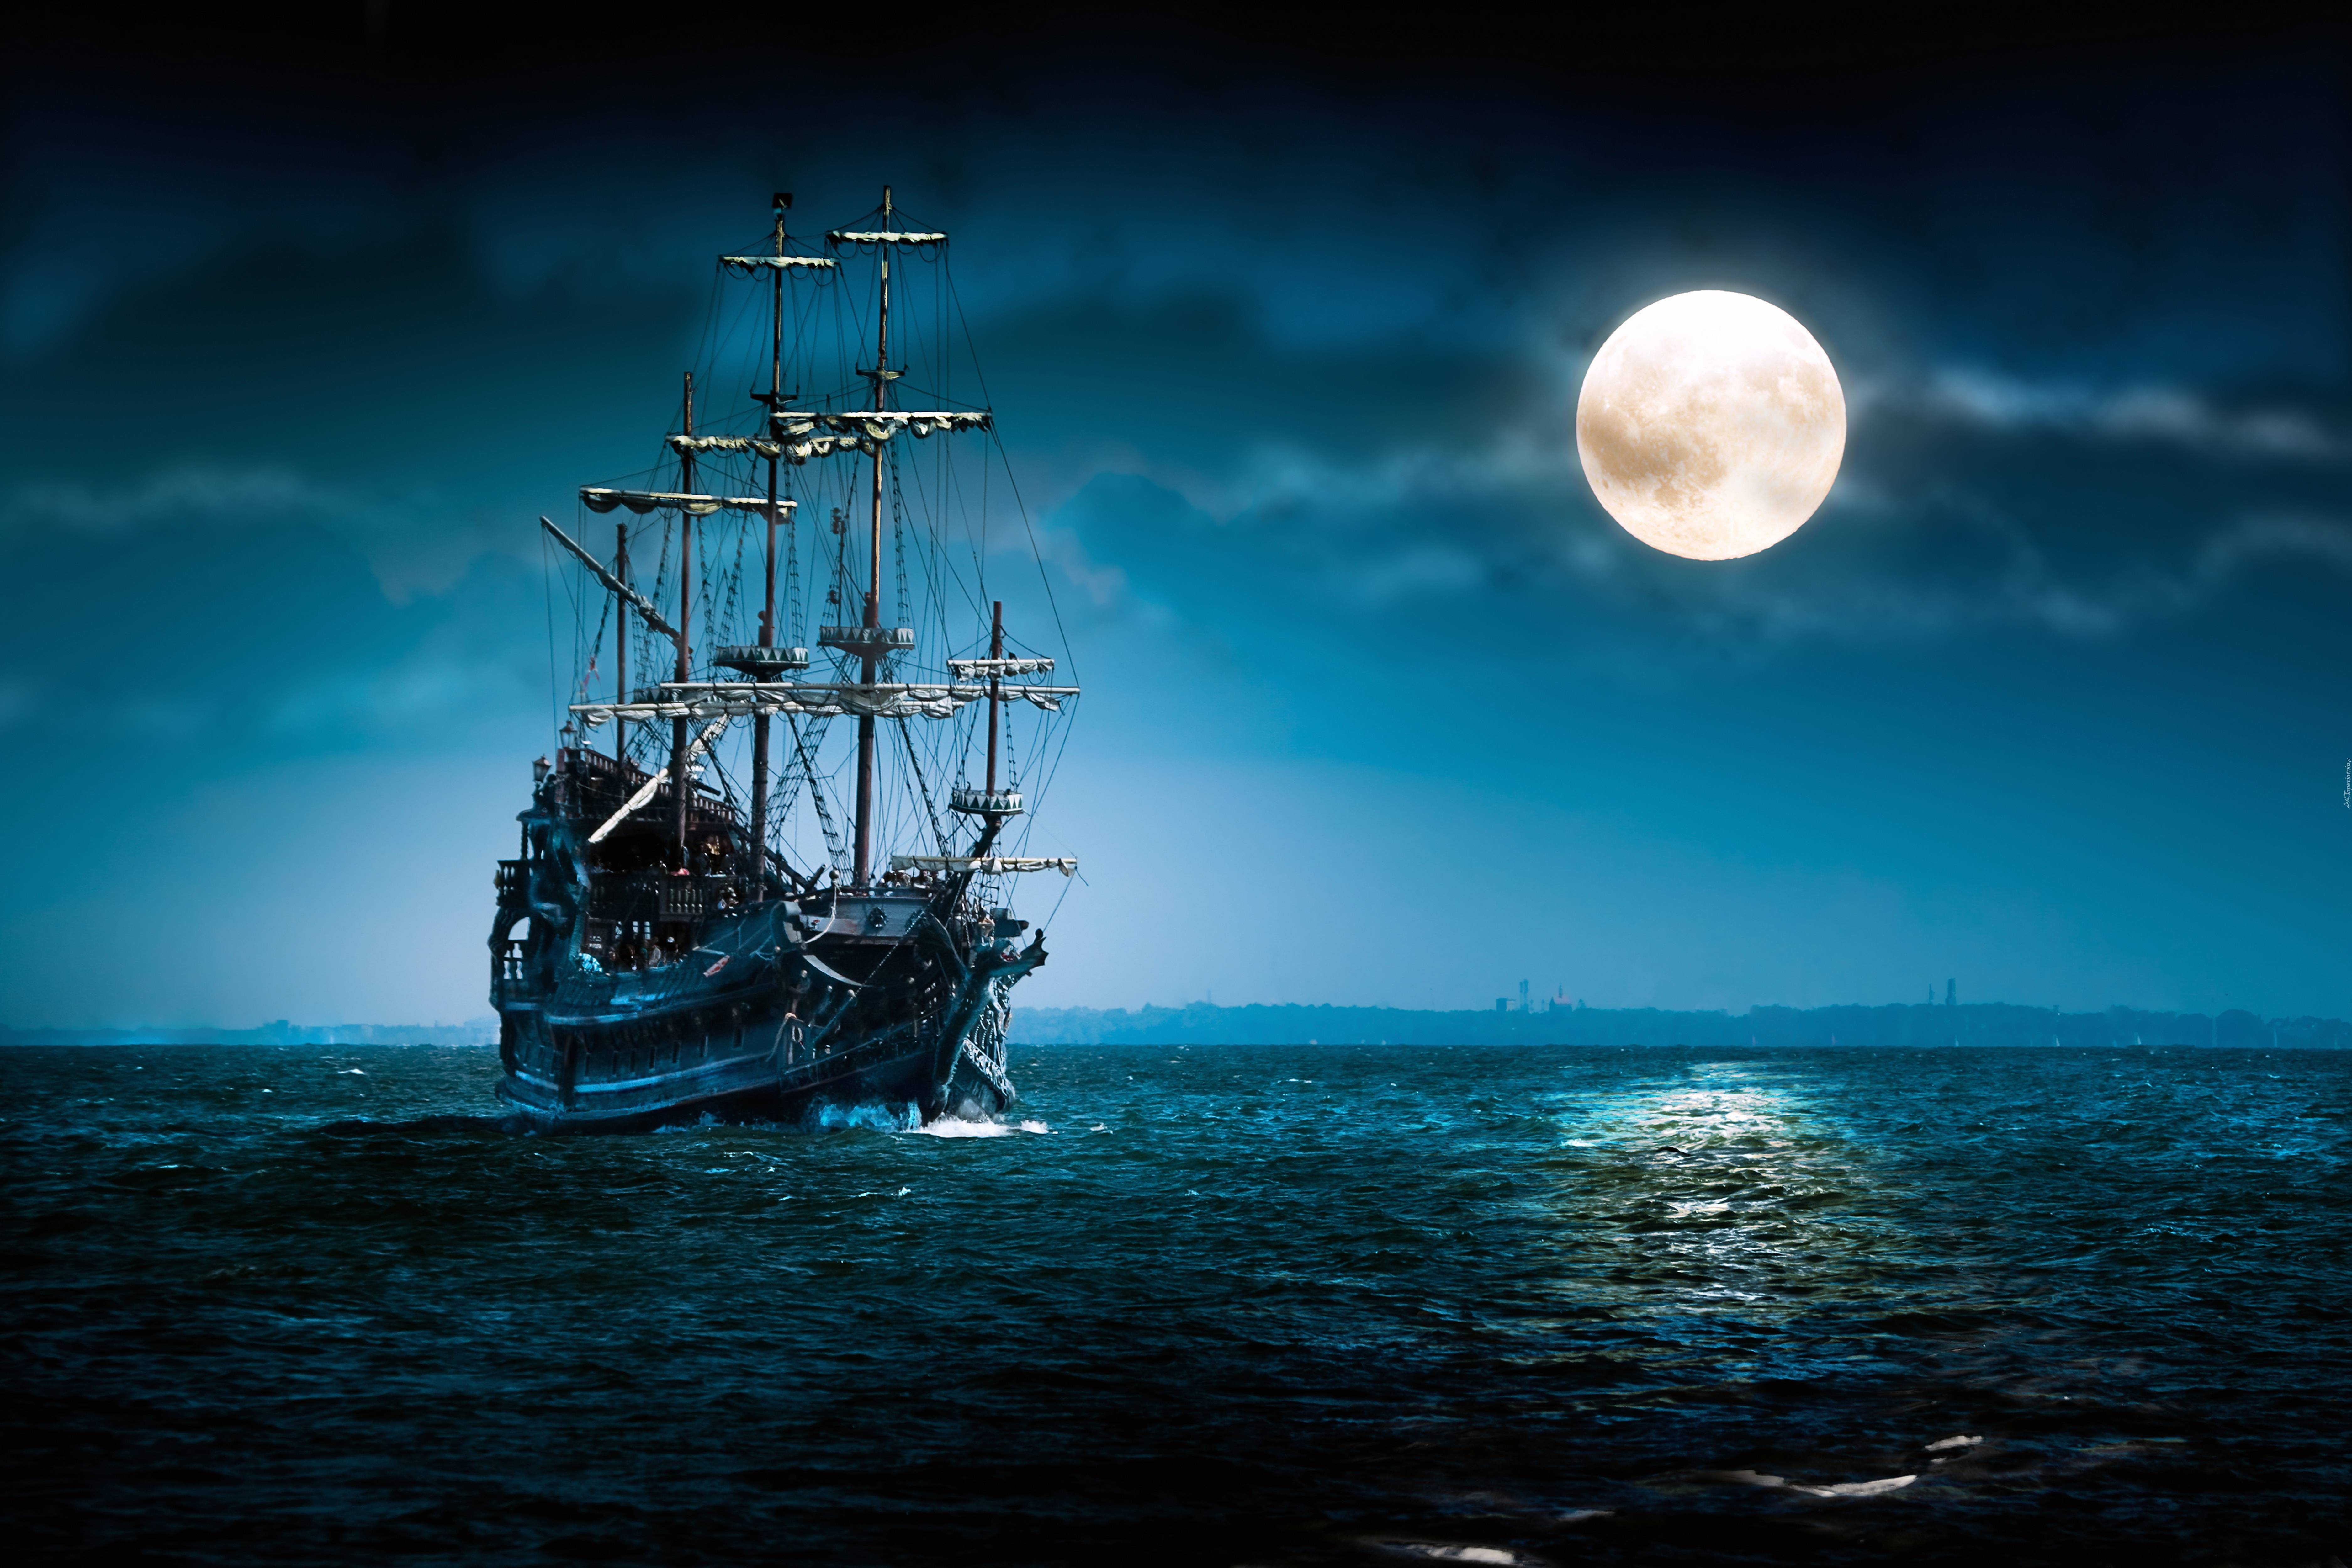 Statek, Morze, Księżyc